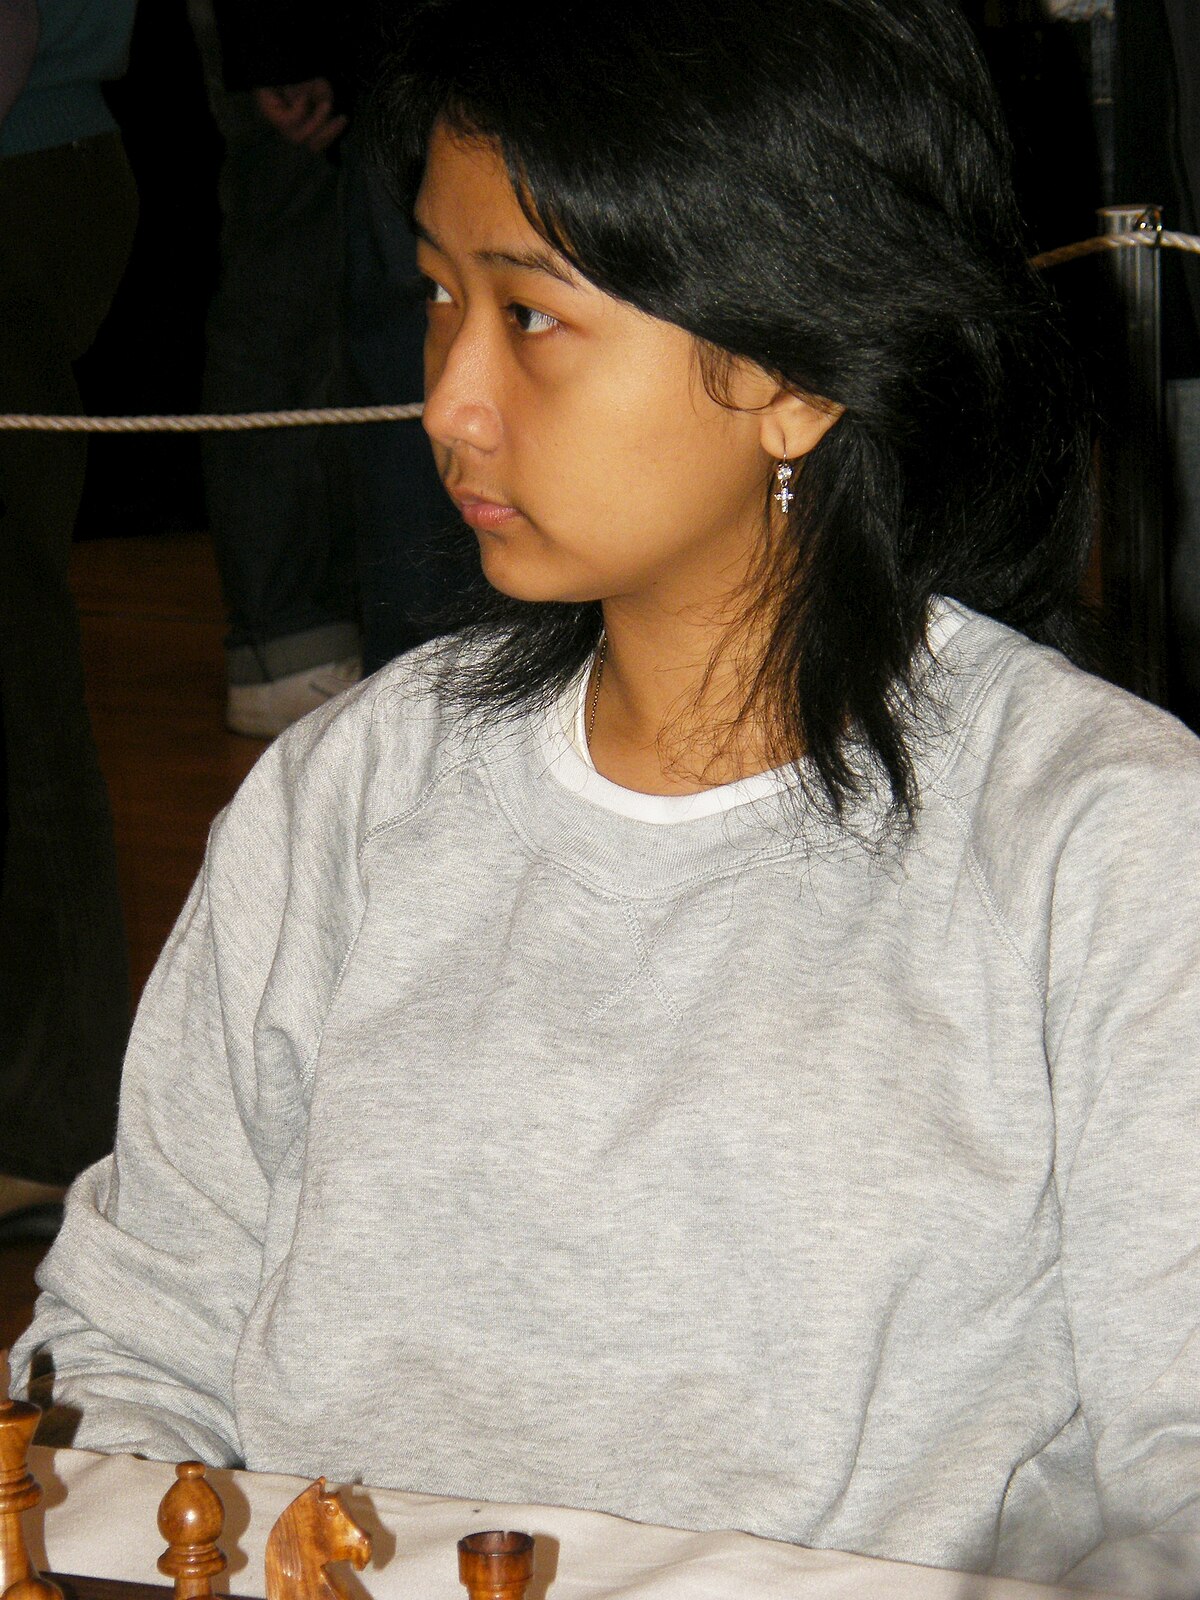 Irene Kharisma Sukandar - Wikipedia